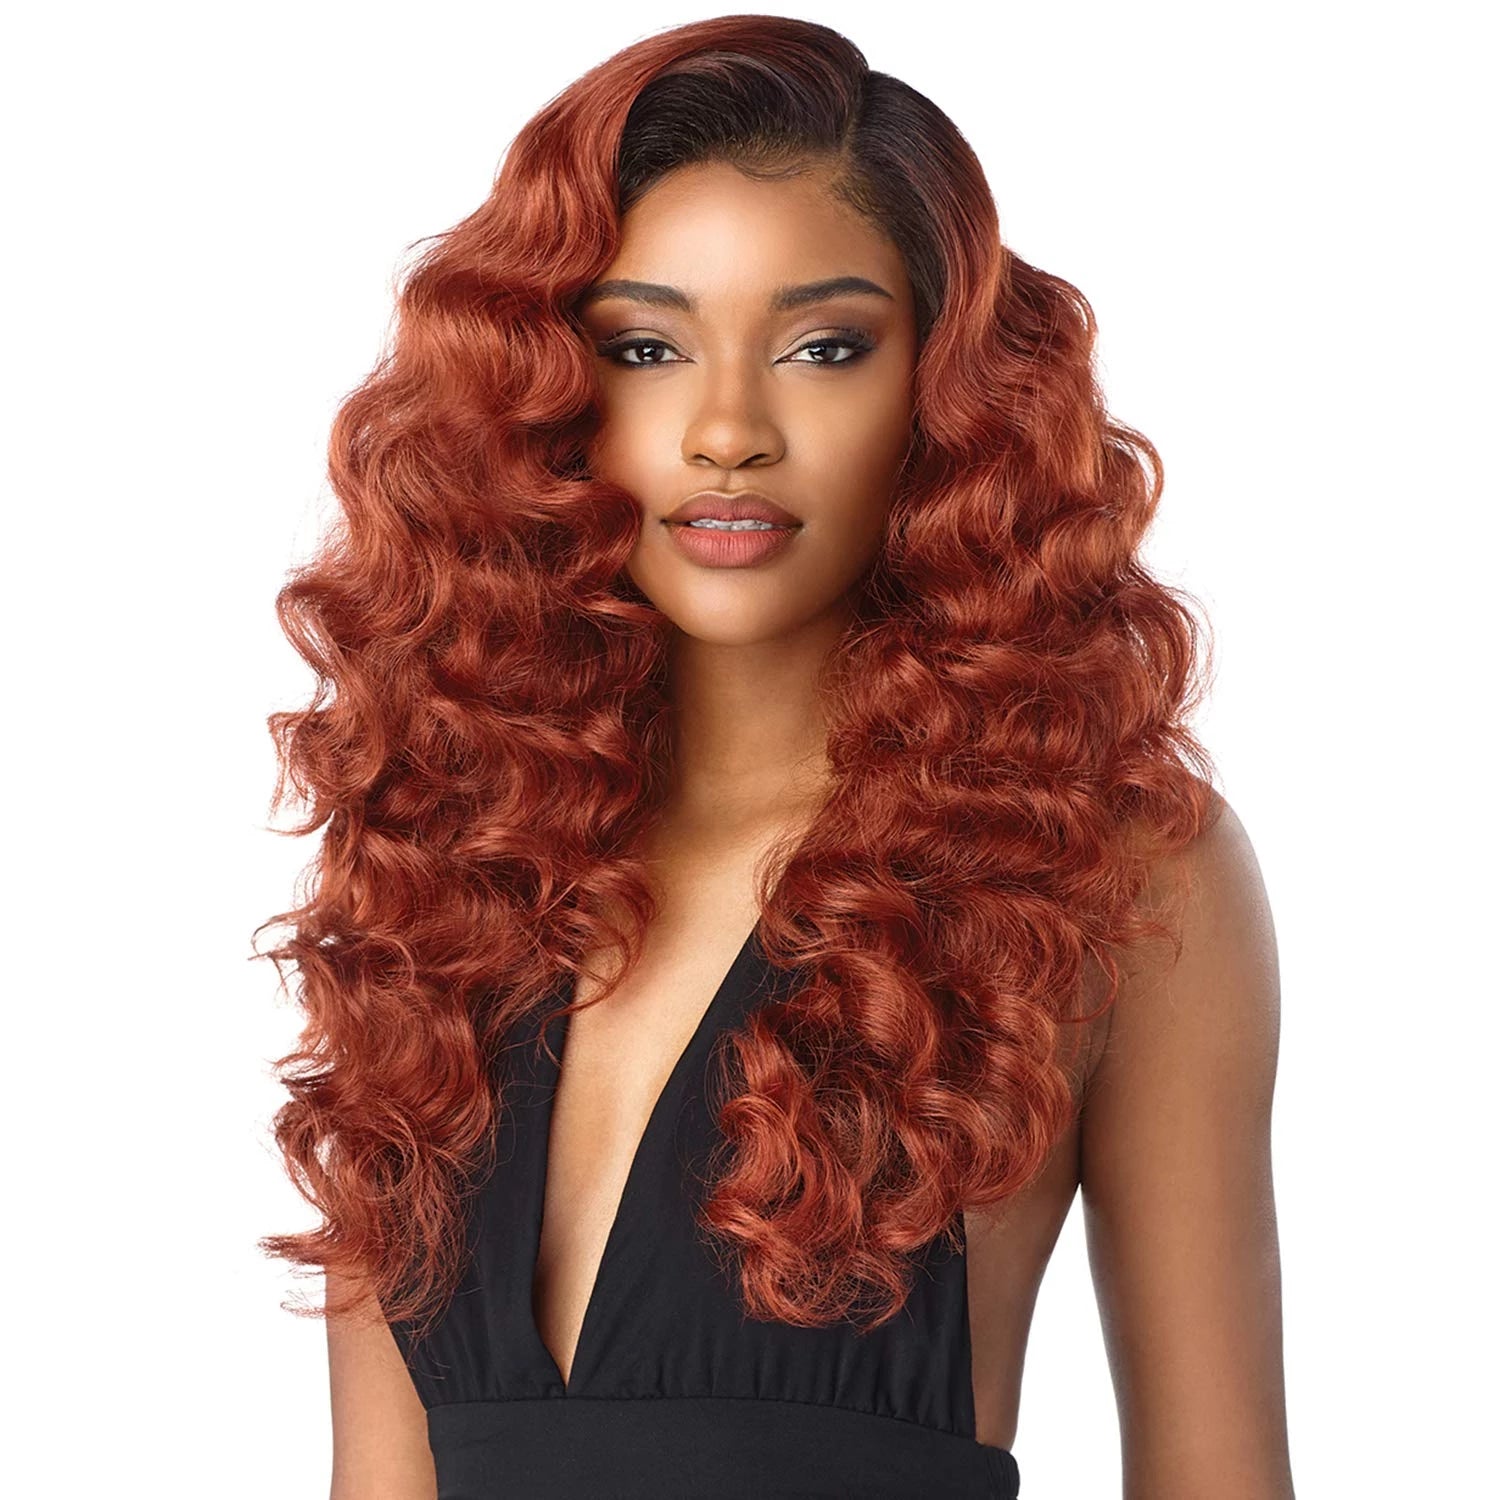 Lace Wigs Under $100